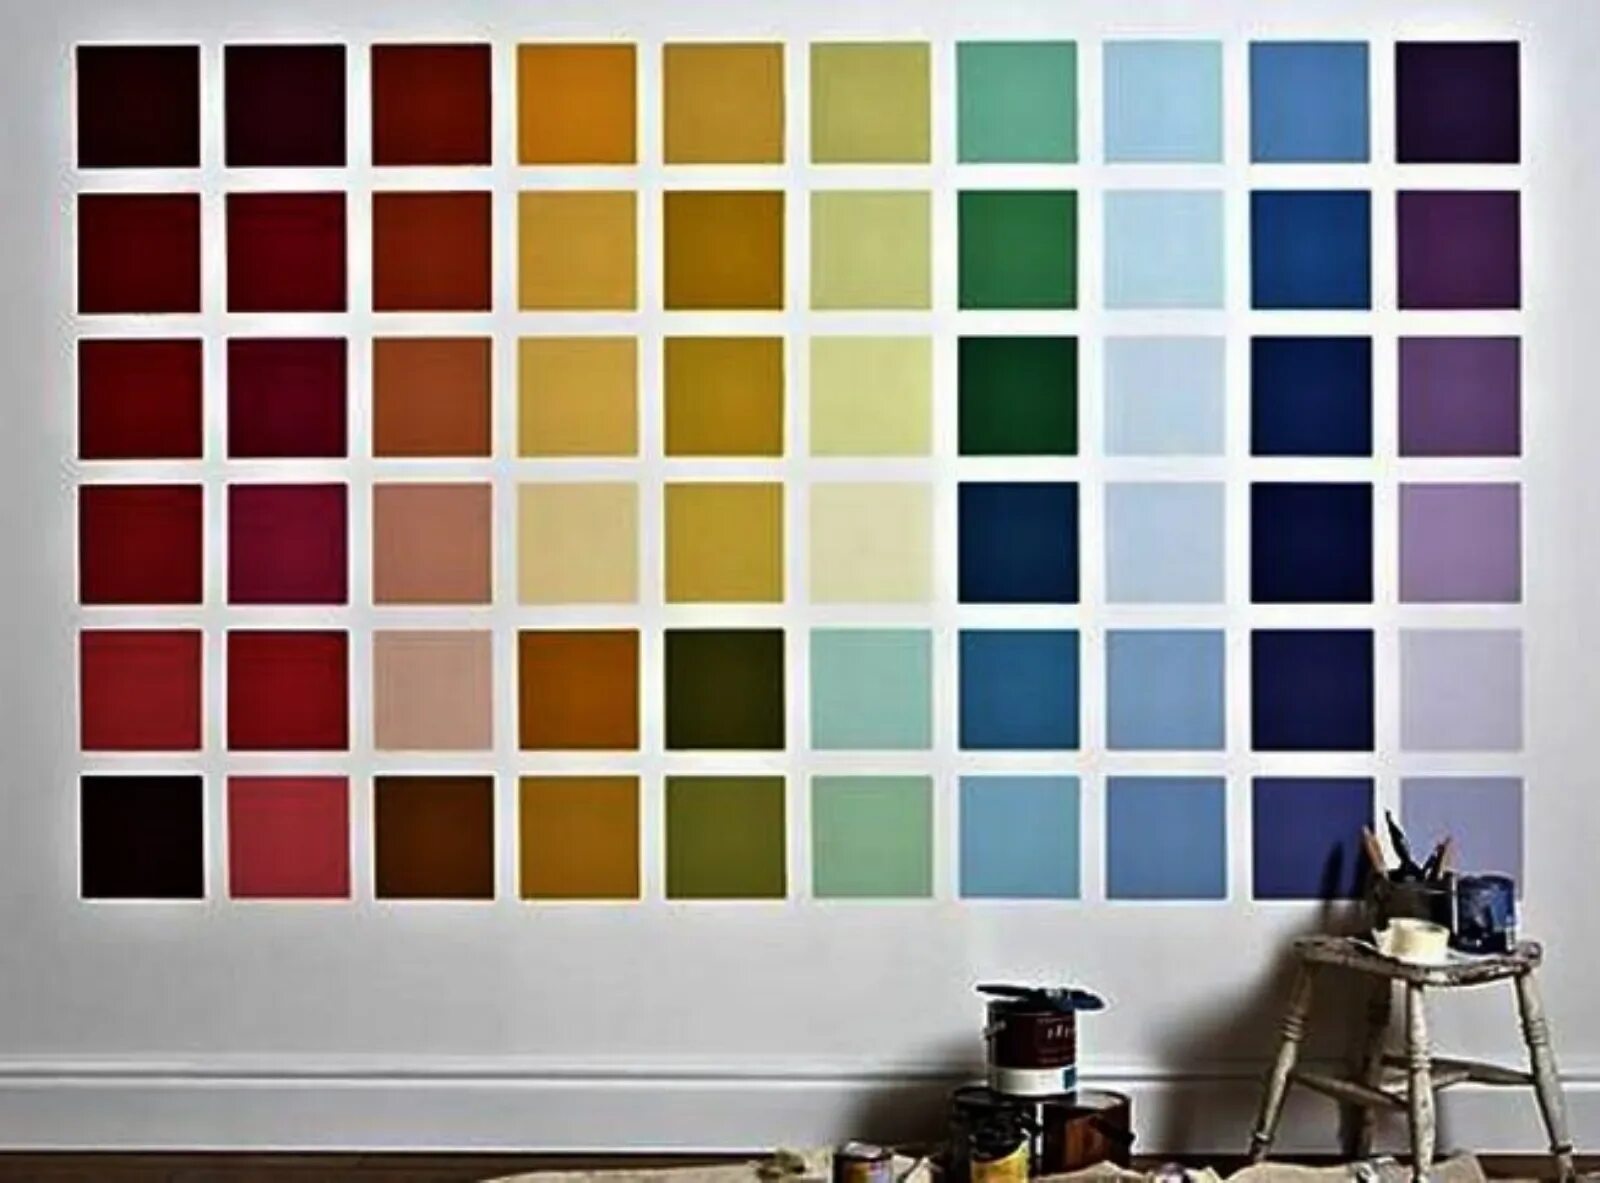 Цвет стен. Краска для стен цвета. Цветовая палитра для стен. Цветовая палитра красок для стен. Краски под обои цвета